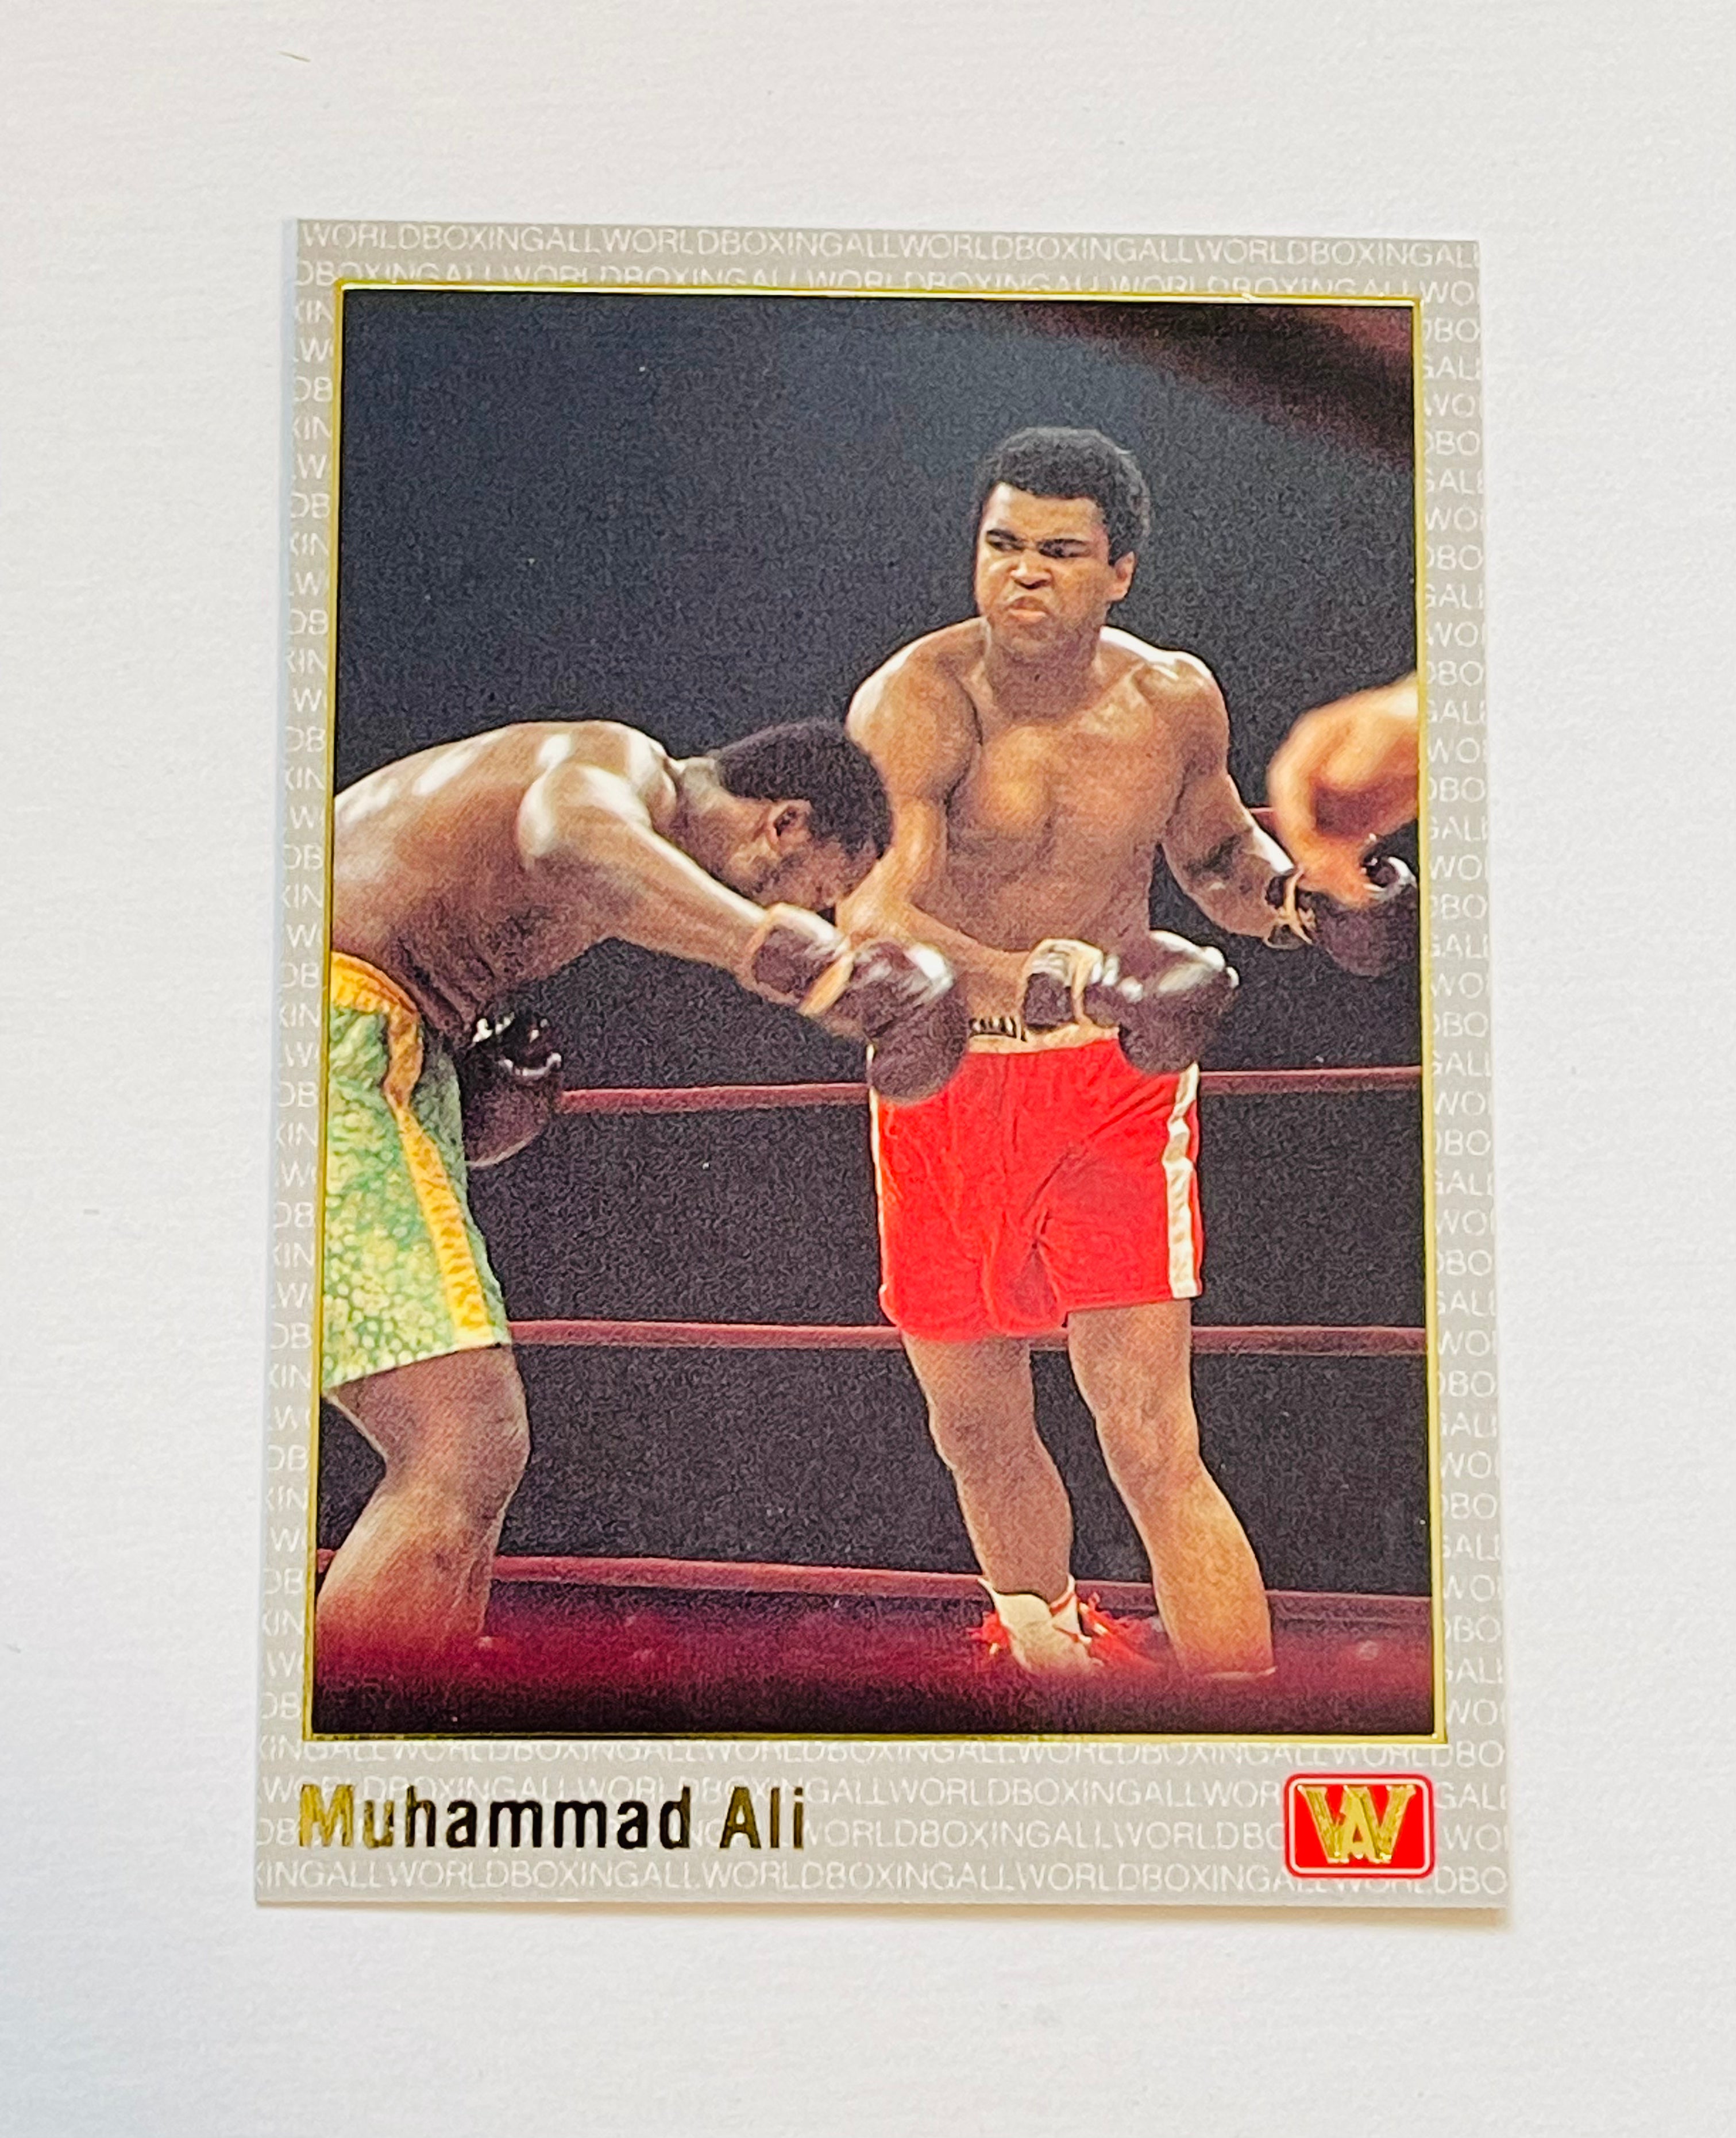 Muhammad Ali rare promo boxing card